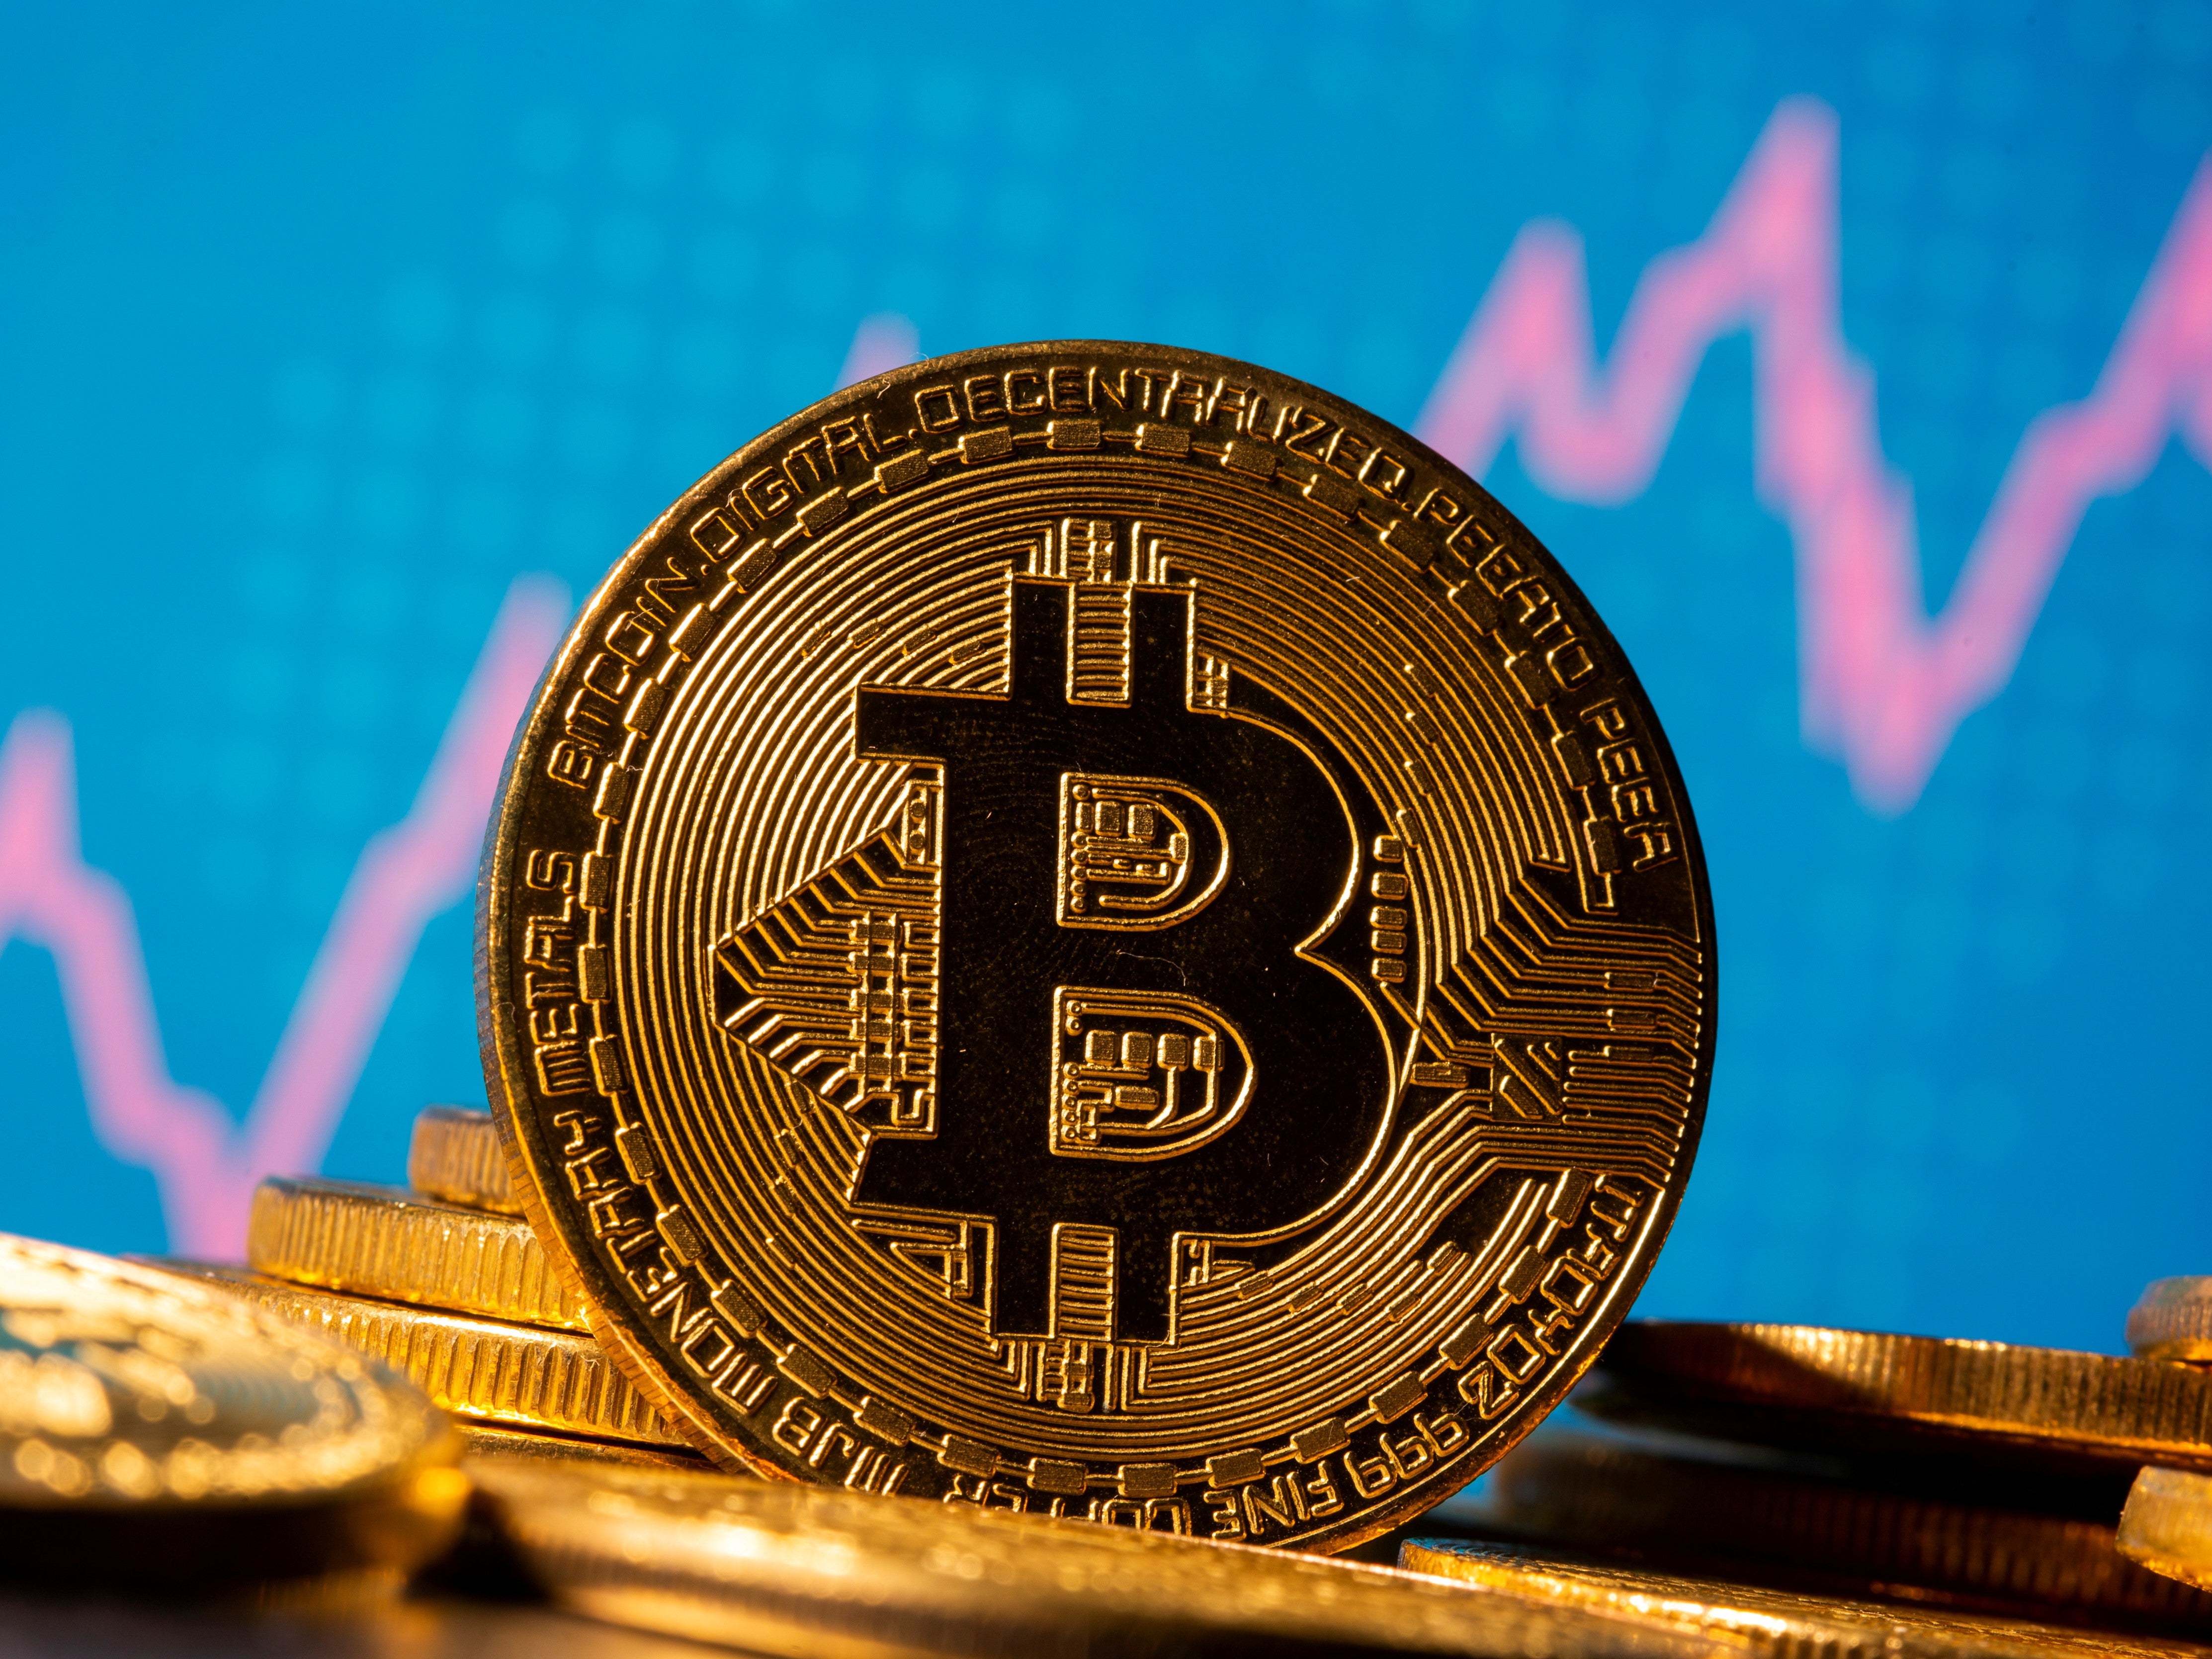 Bitcoin’s record-breaking run began in March 2020